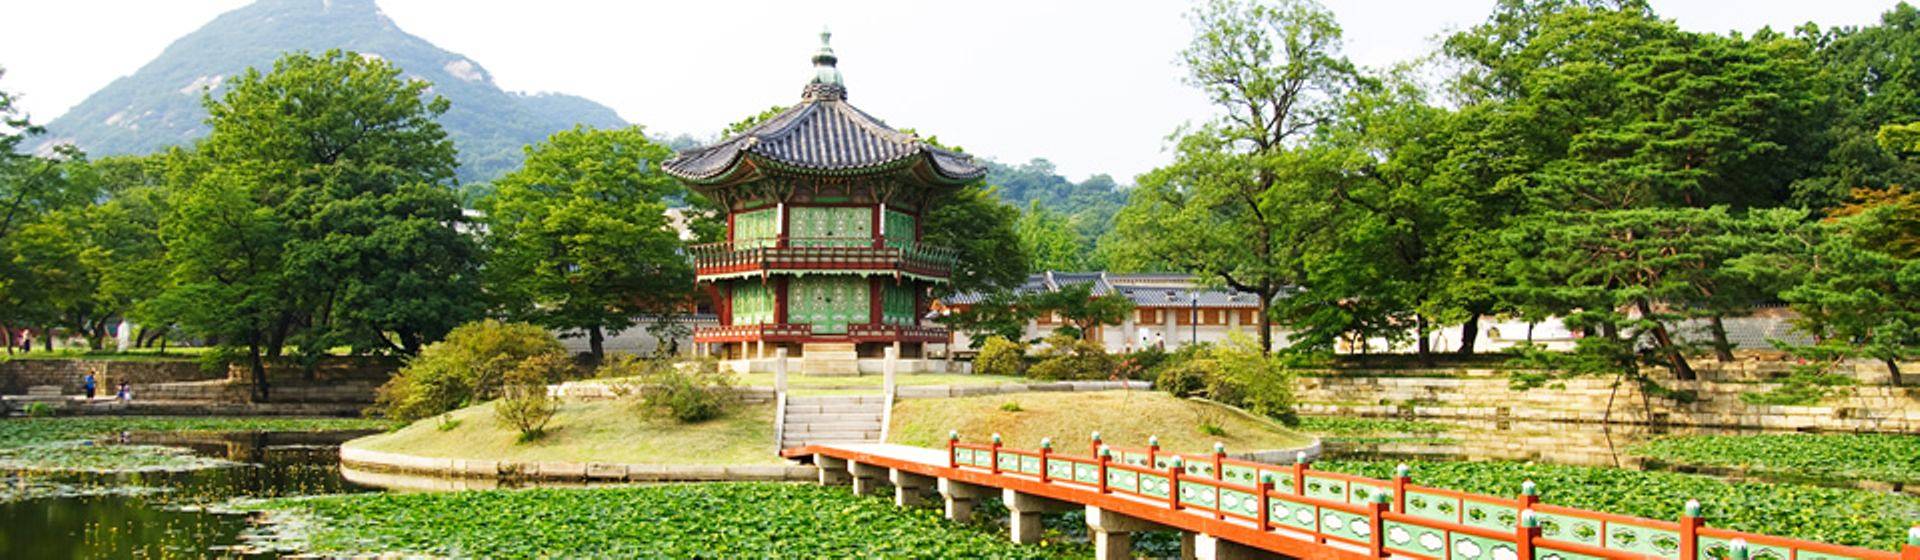 Holidays to South Korea Image